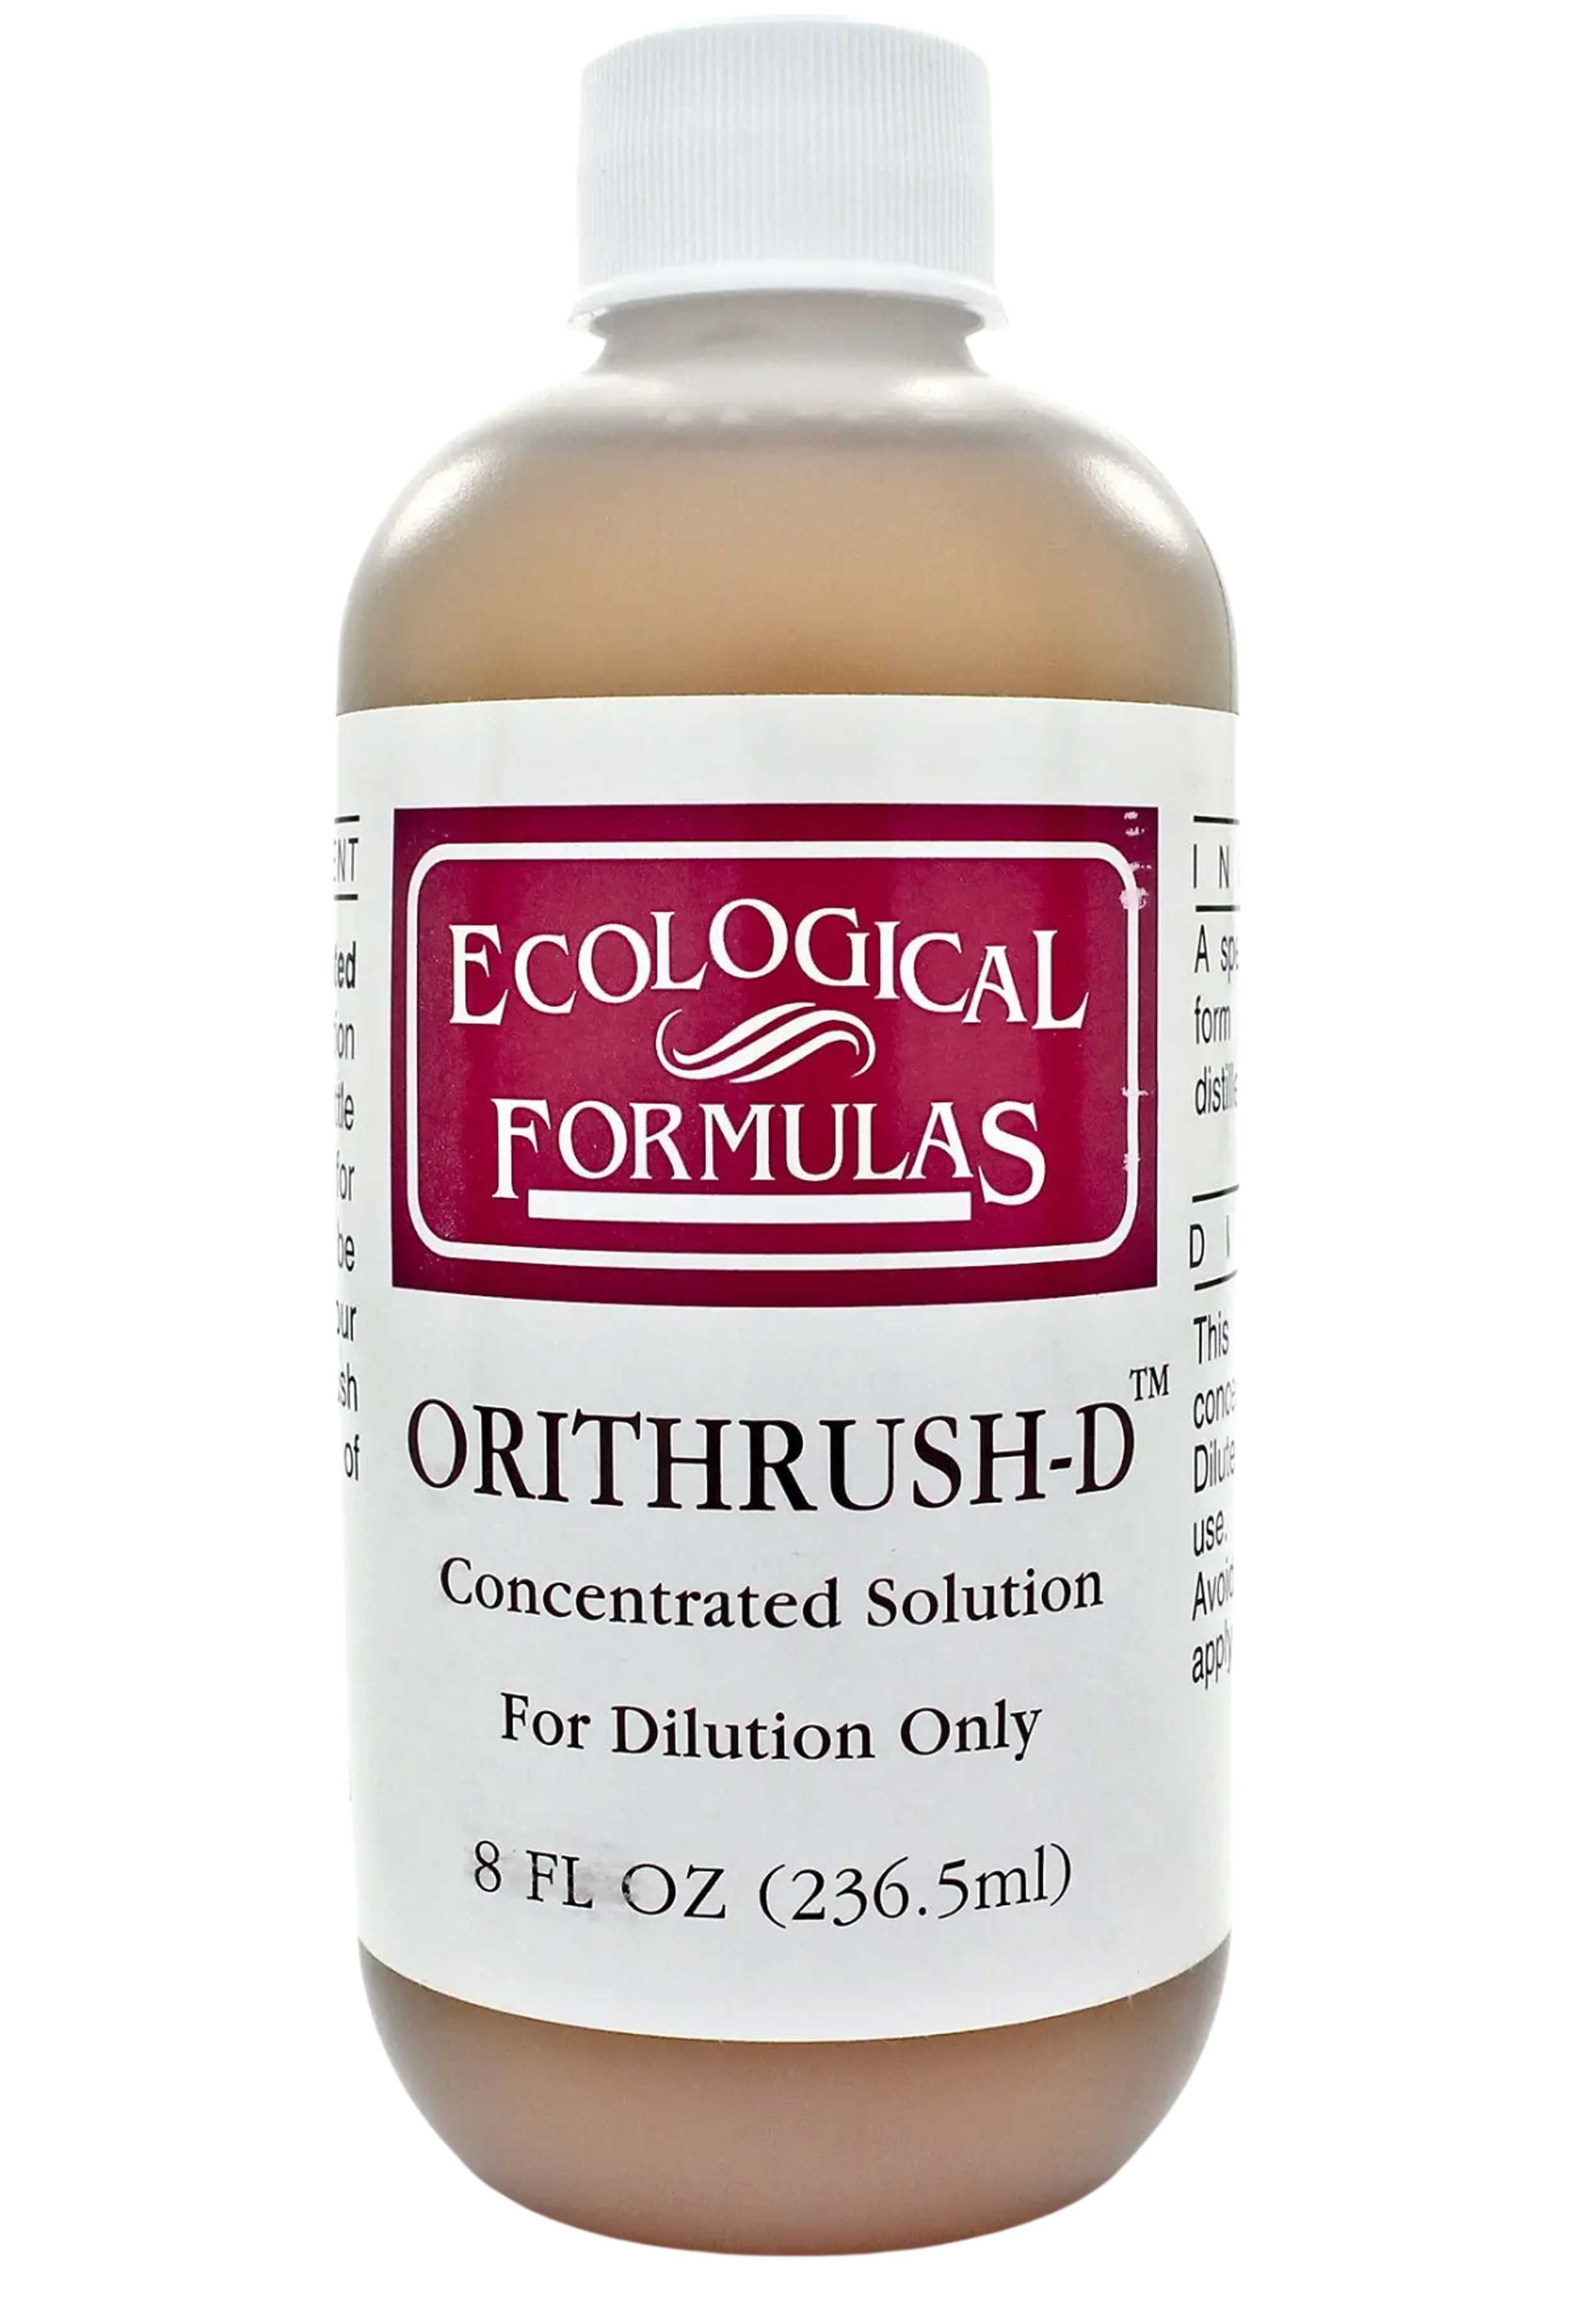 Ecological Formulas/Cardiovascular Research Orithrush-D